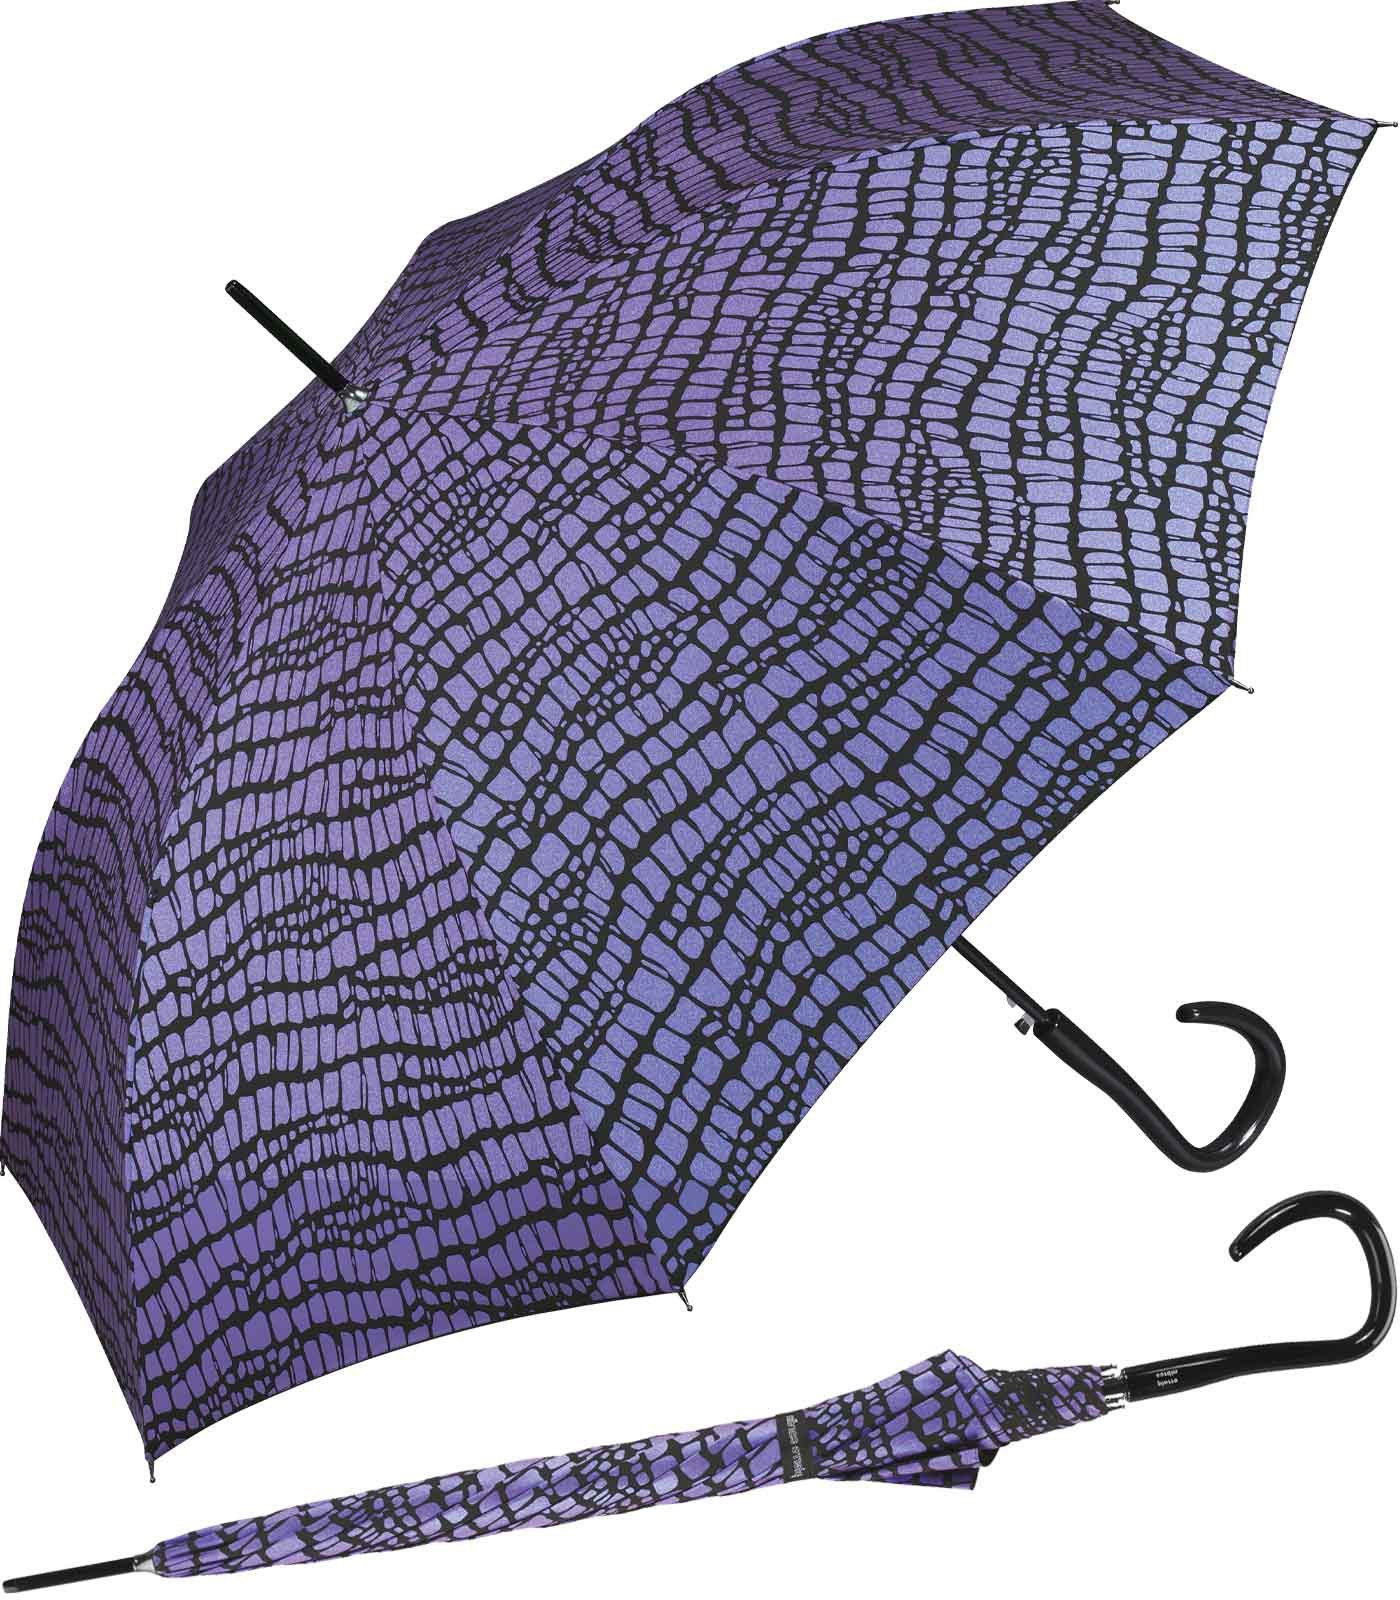 Pierre Cardin den Auf-Automatik, Damen-Regenschirm Regenschirm Krokodil-Optik lila-schwarz mit großer für Langregenschirm